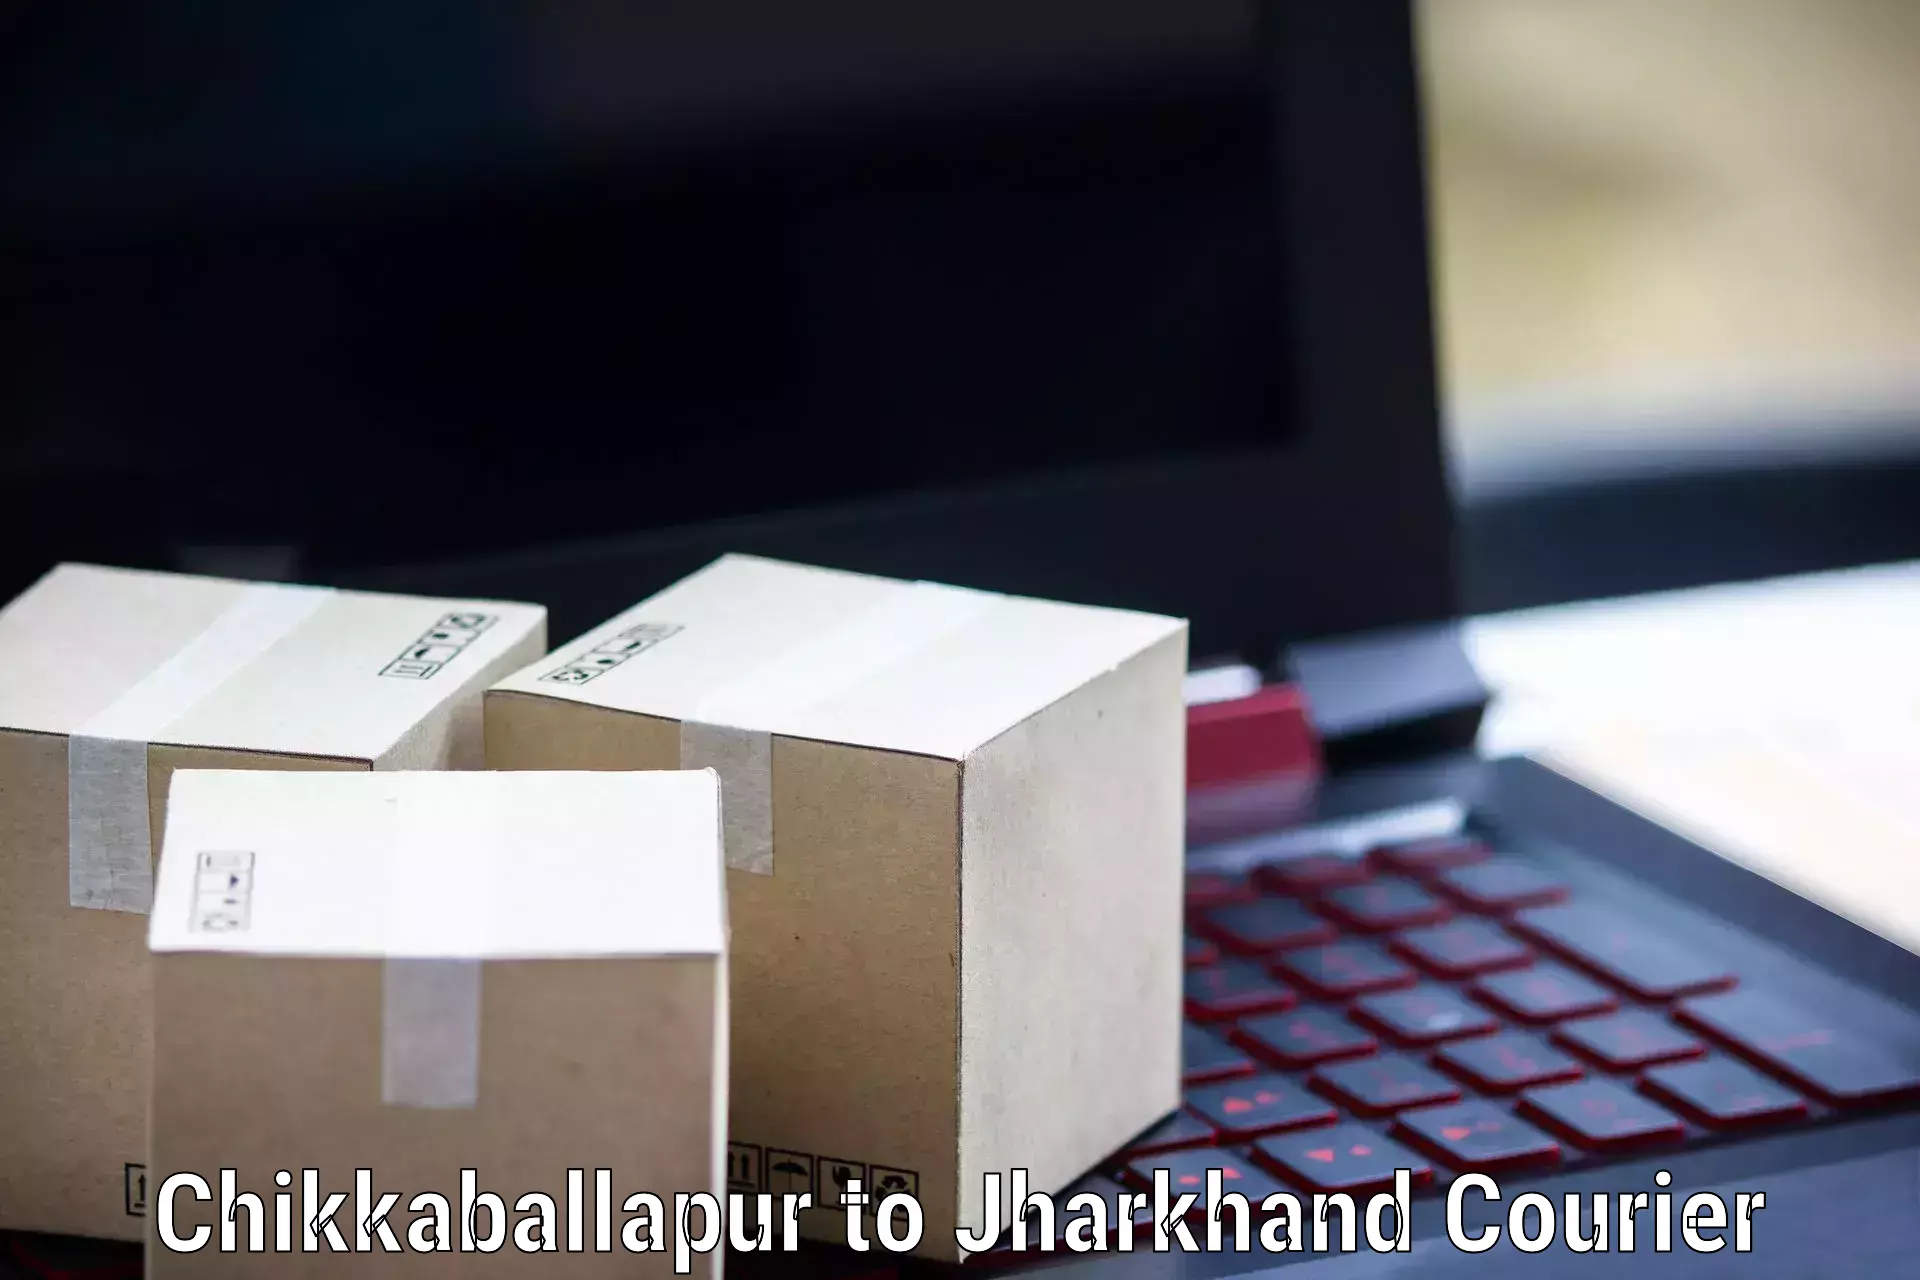 Round-the-clock parcel delivery Chikkaballapur to Medininagar